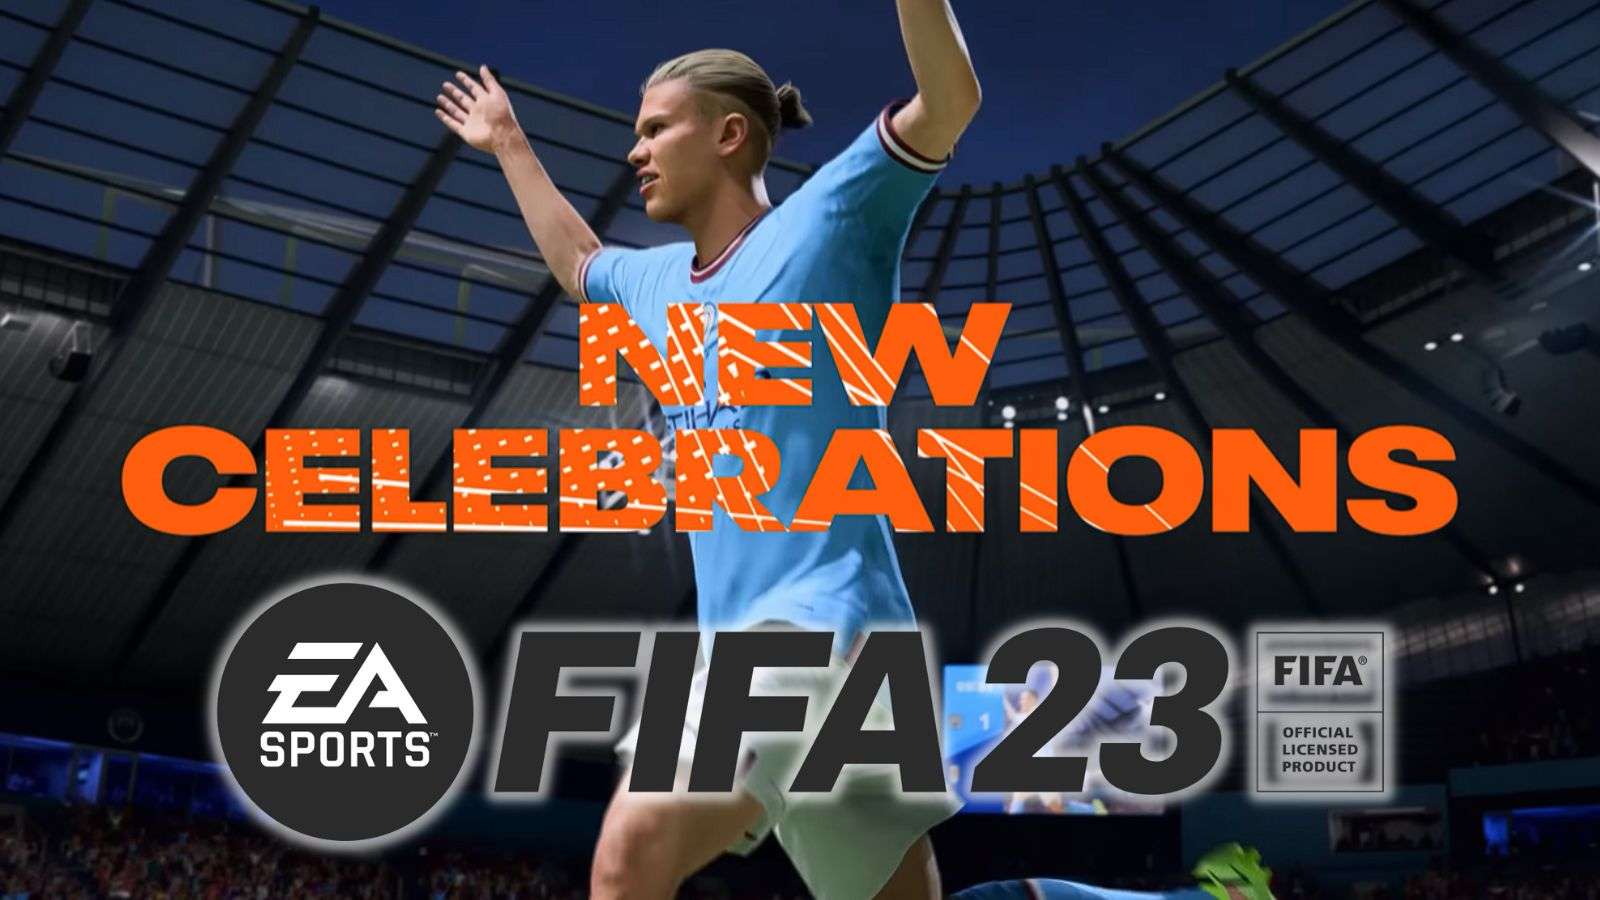 fifa 23 new celebrations header image logo